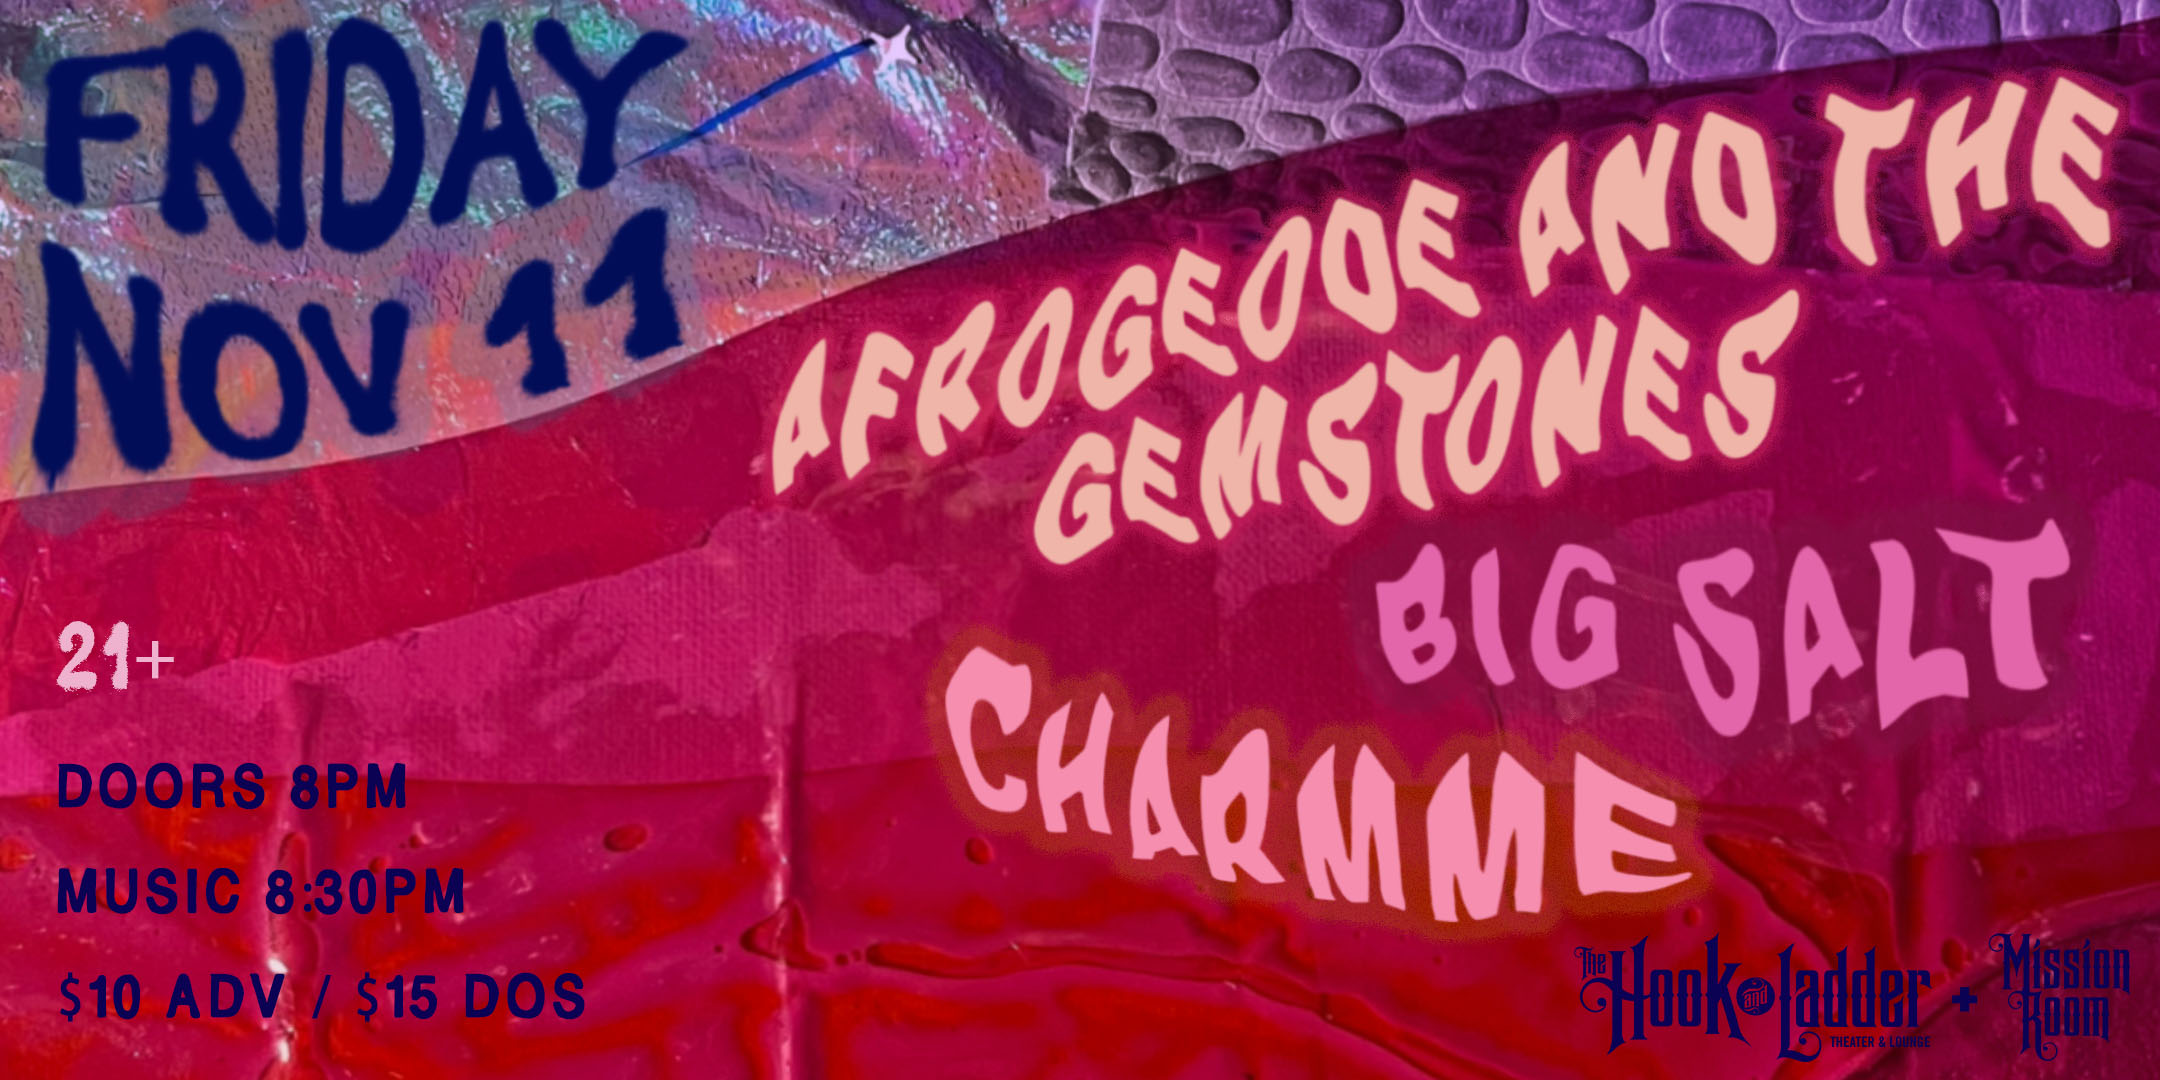 AfroGeode & the Gemstones Big Salt Charmme Friday November 11 The Mission Room Doors 8pm :: Music 8:30pm :: 21+ $10 ADV / $15 DOS